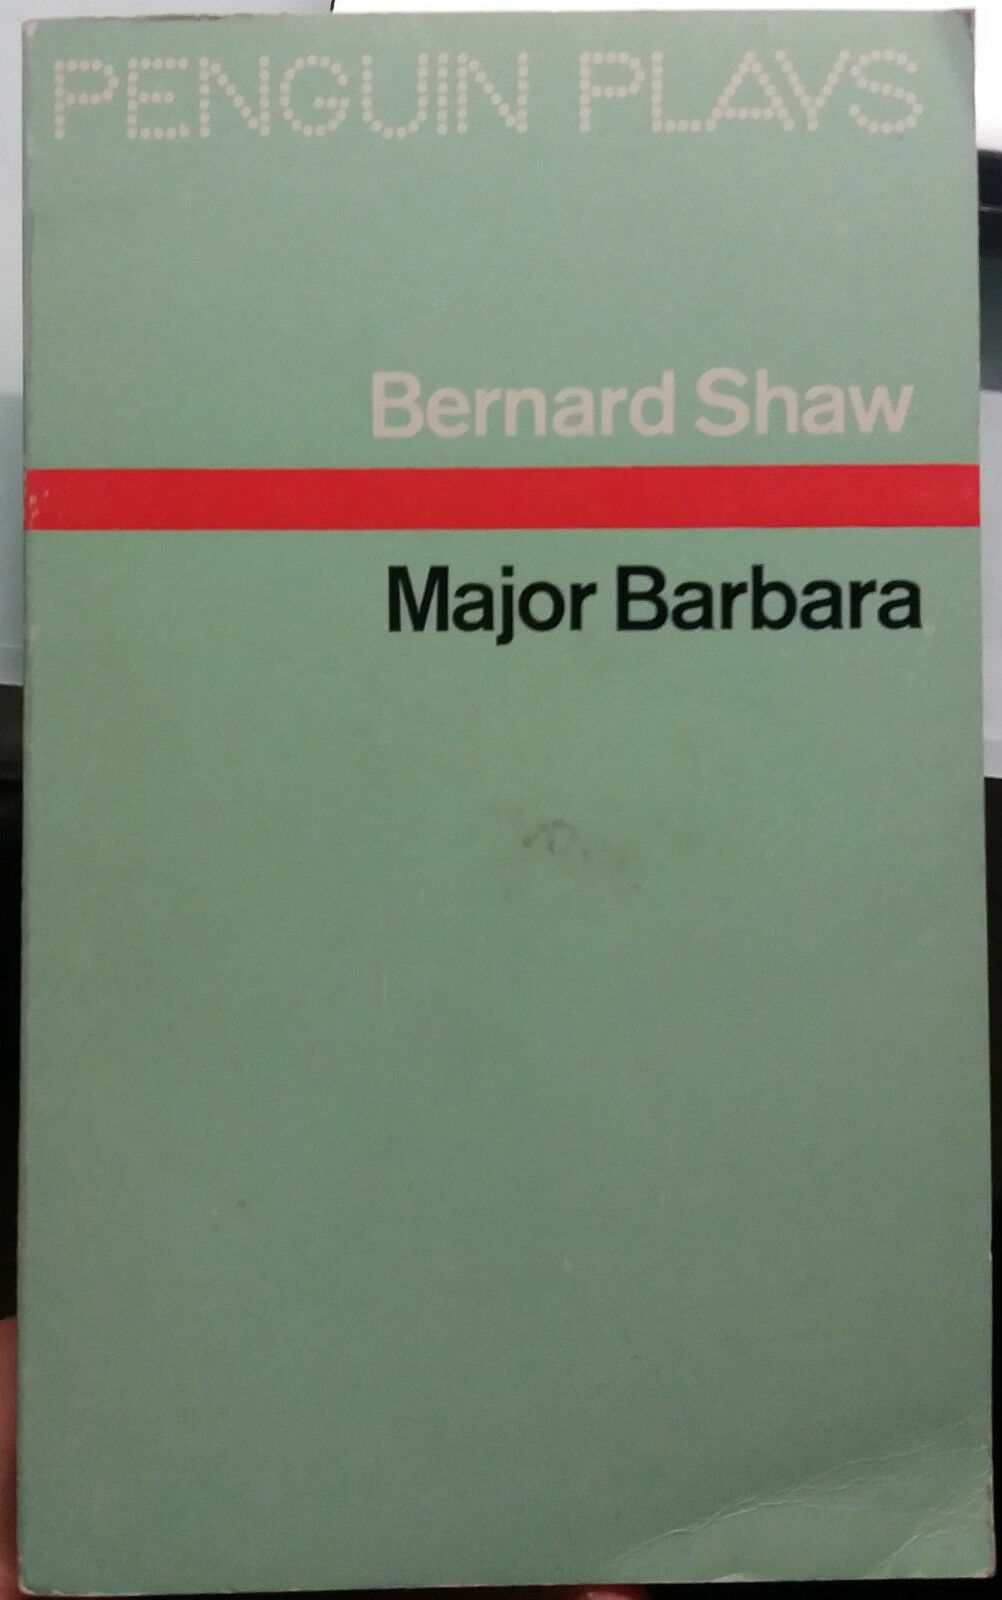 Major Barbara - Bernard Shaw - Penguin Books - 1970 - G